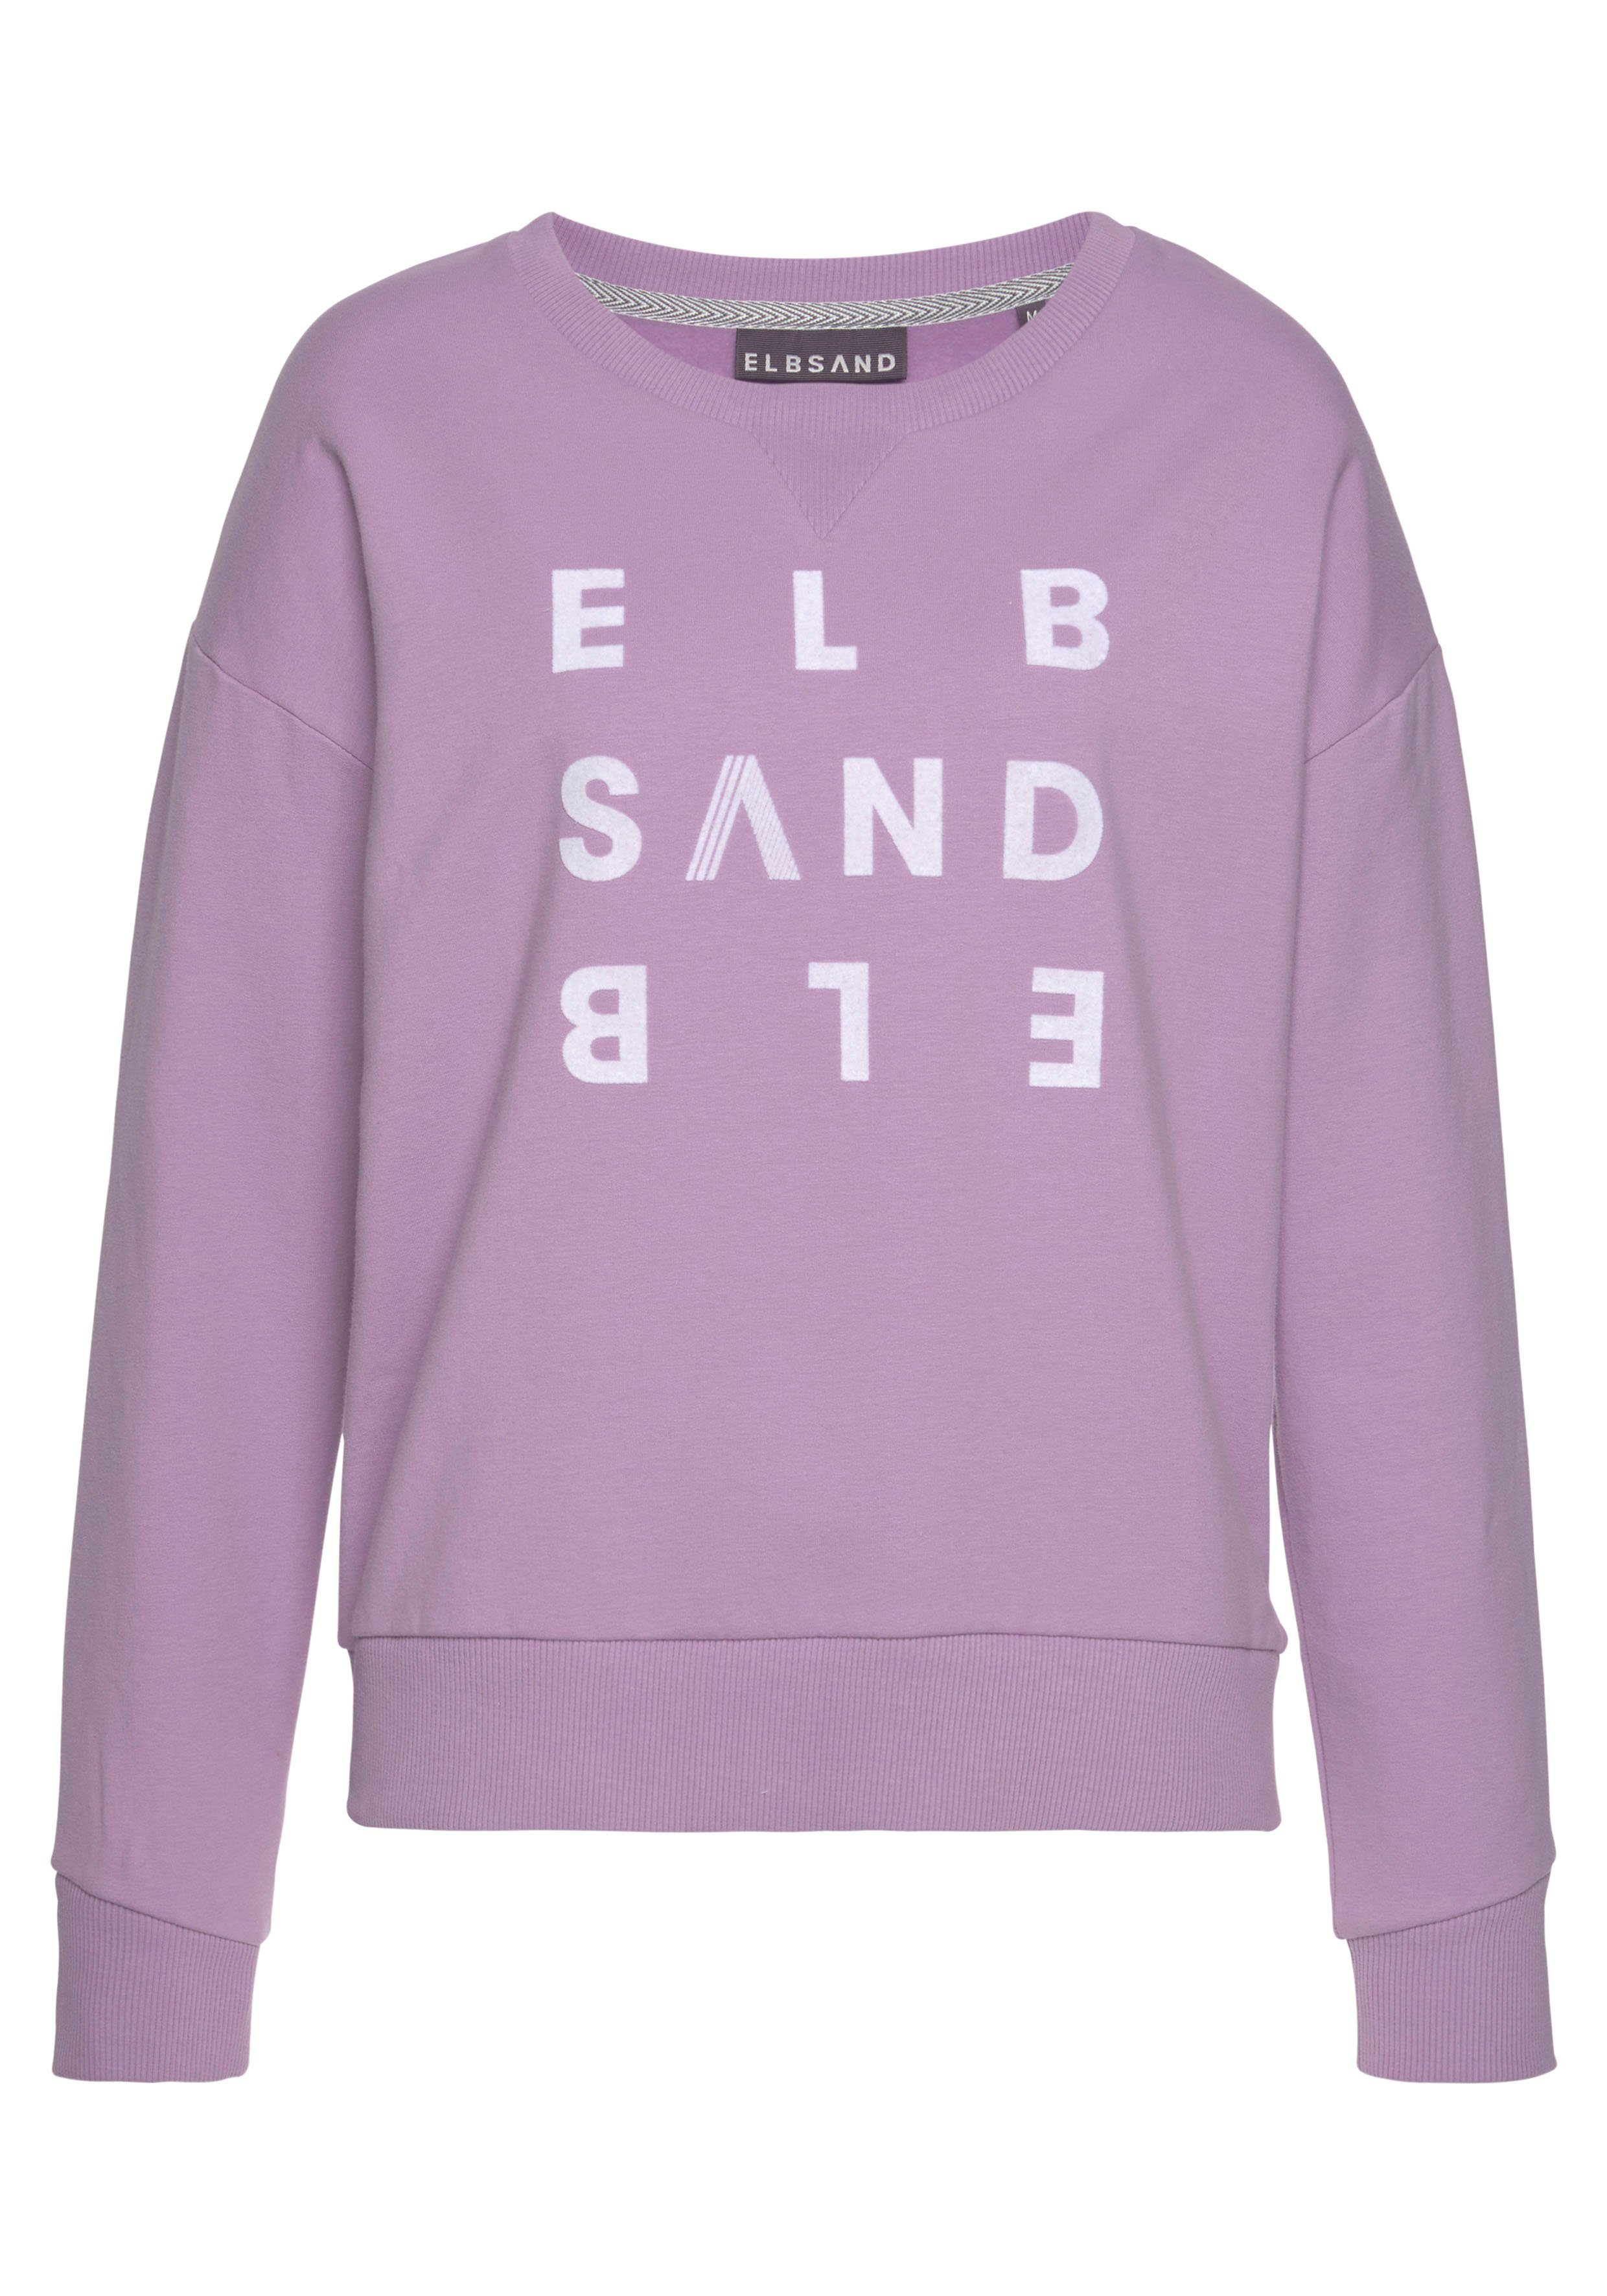 Sweatshirt mit Ylva Elbsand Logodruck